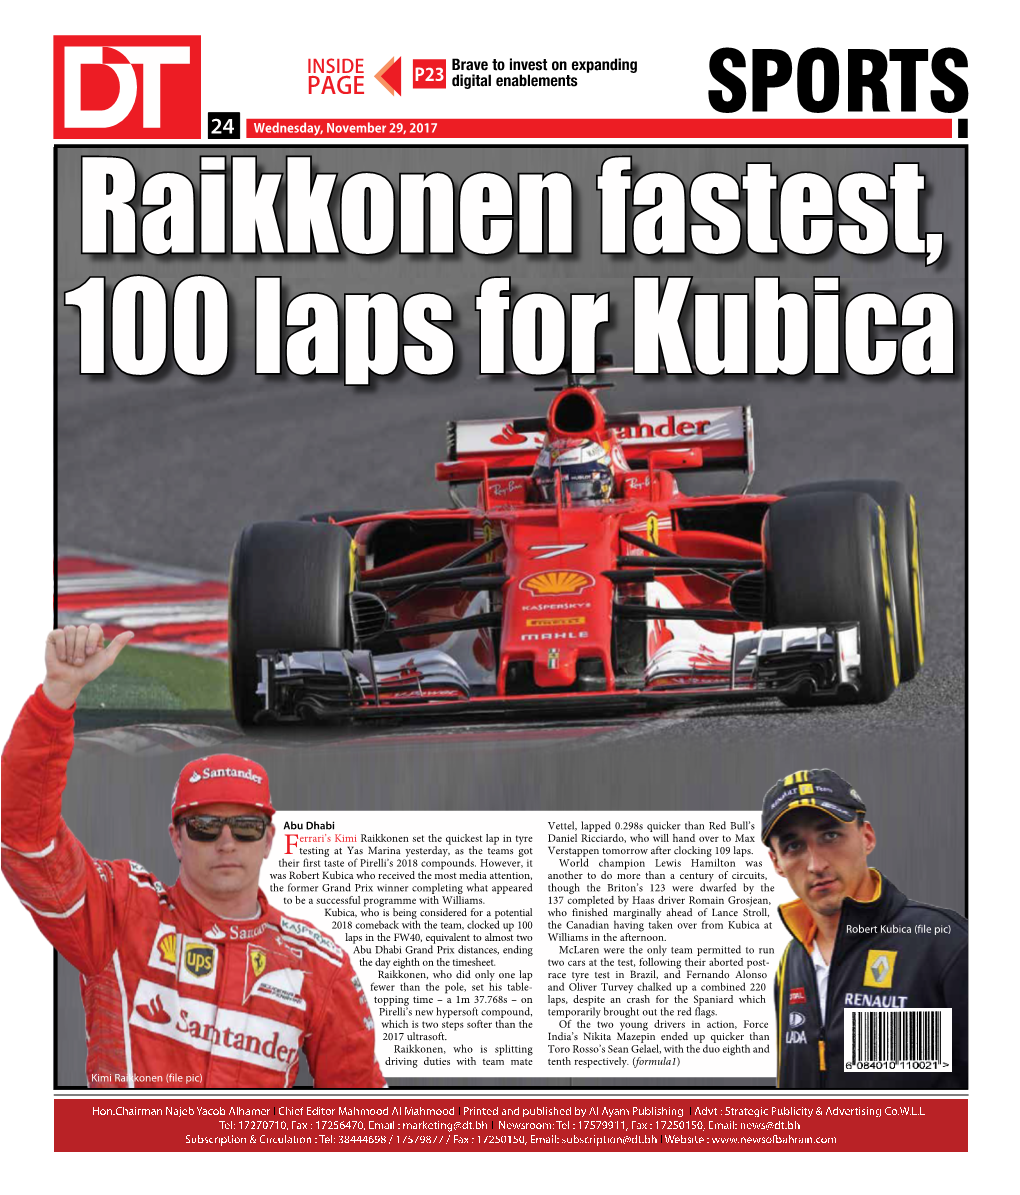 SPORTS 2424 Wednesday, November 29, 2017 Raikkonen Fastest, 100 Laps for Kubica